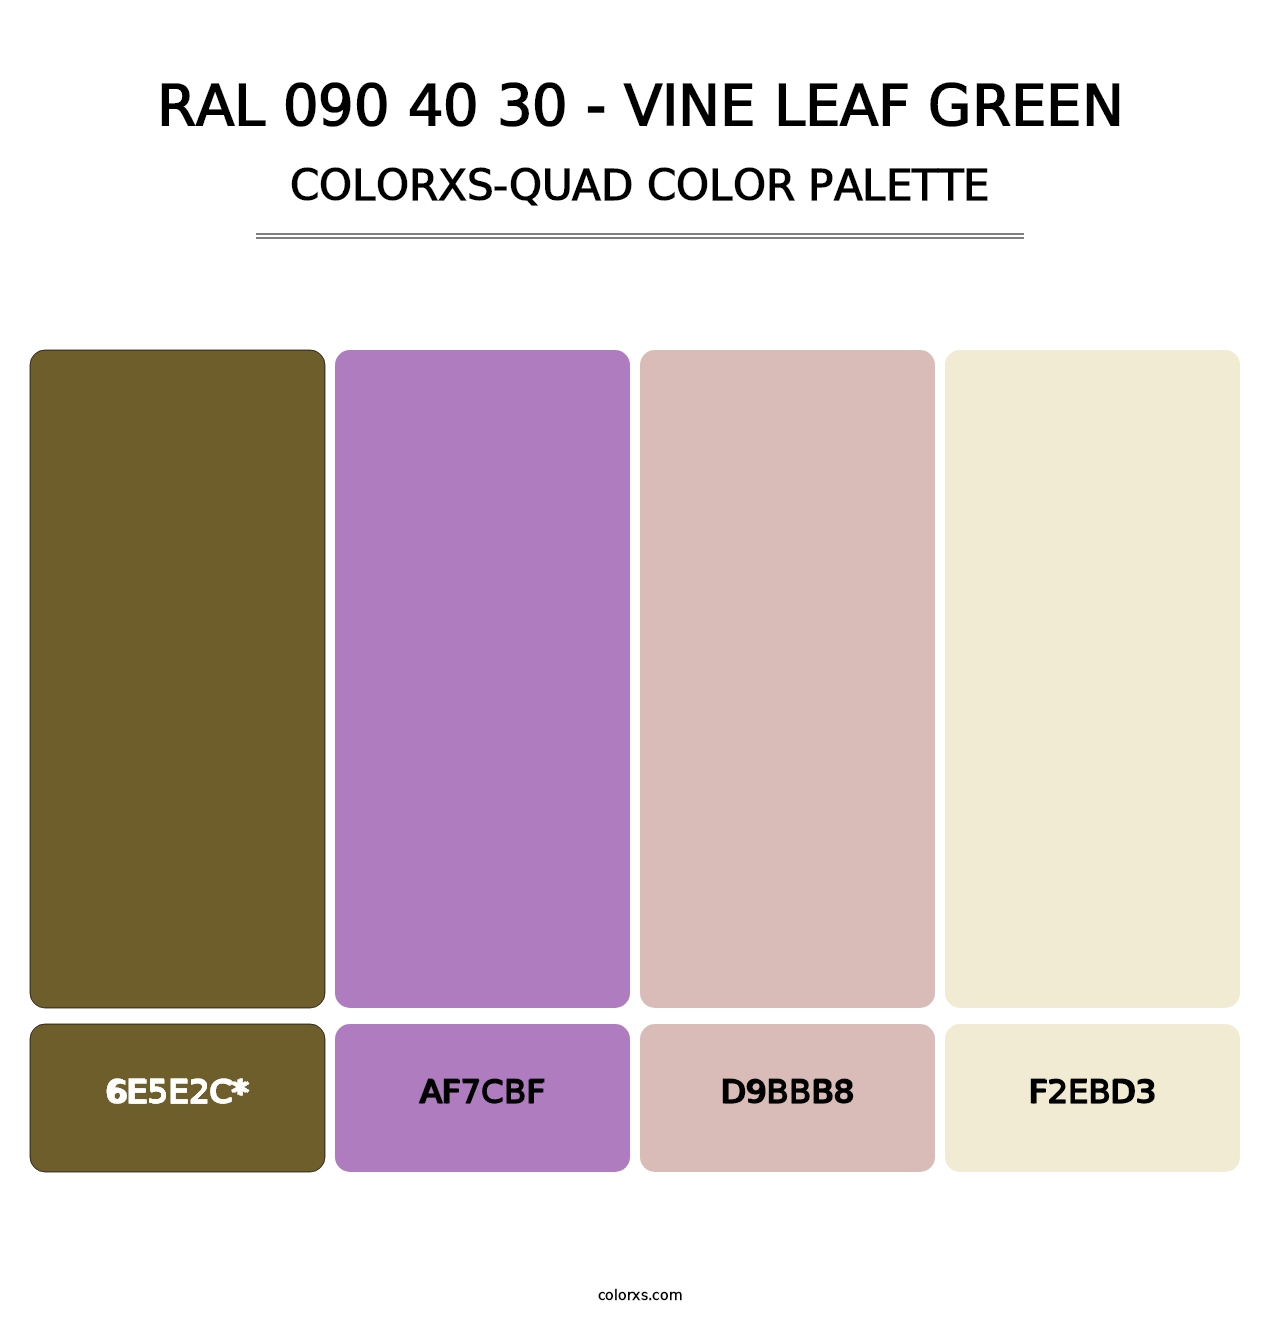 RAL 090 40 30 - Vine Leaf Green - Colorxs Quad Palette